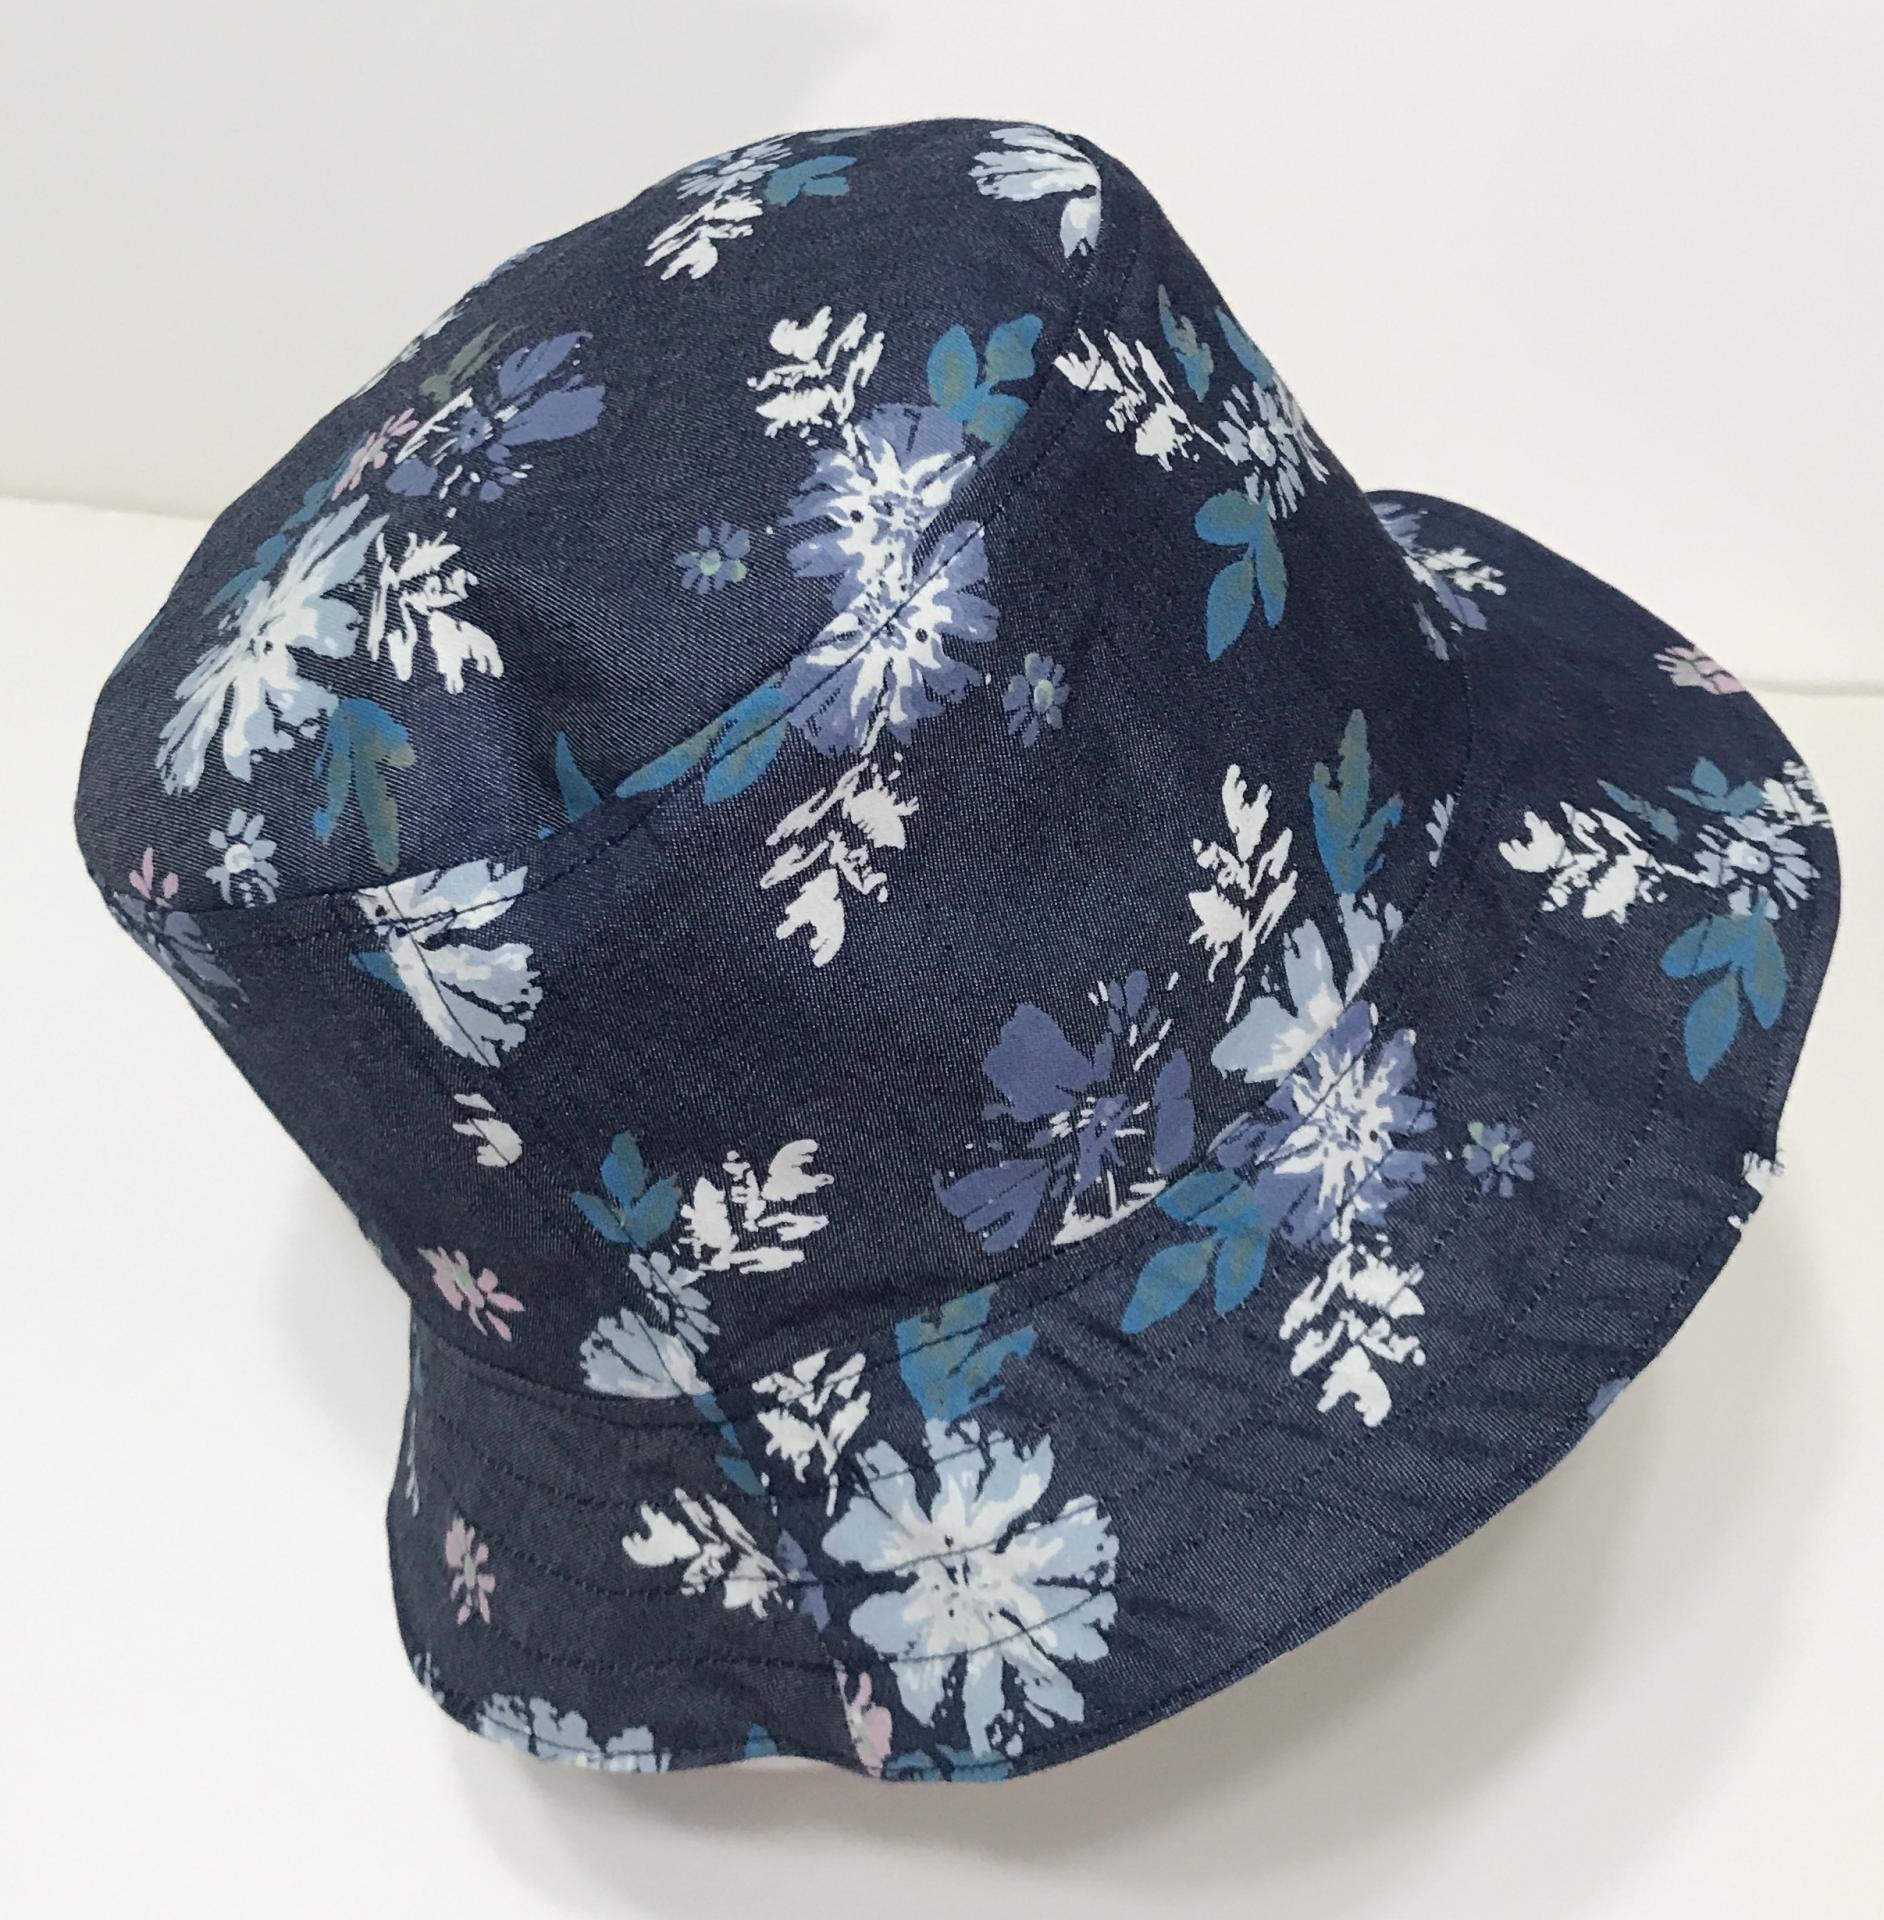 Floral & Denim Floral Bucket Hat, Reversible, Sizes S-XXL, Cotton, floppy hat, gardening hat, sun hat, casual hat, woman's fishing hat, polka dots, adults or older children